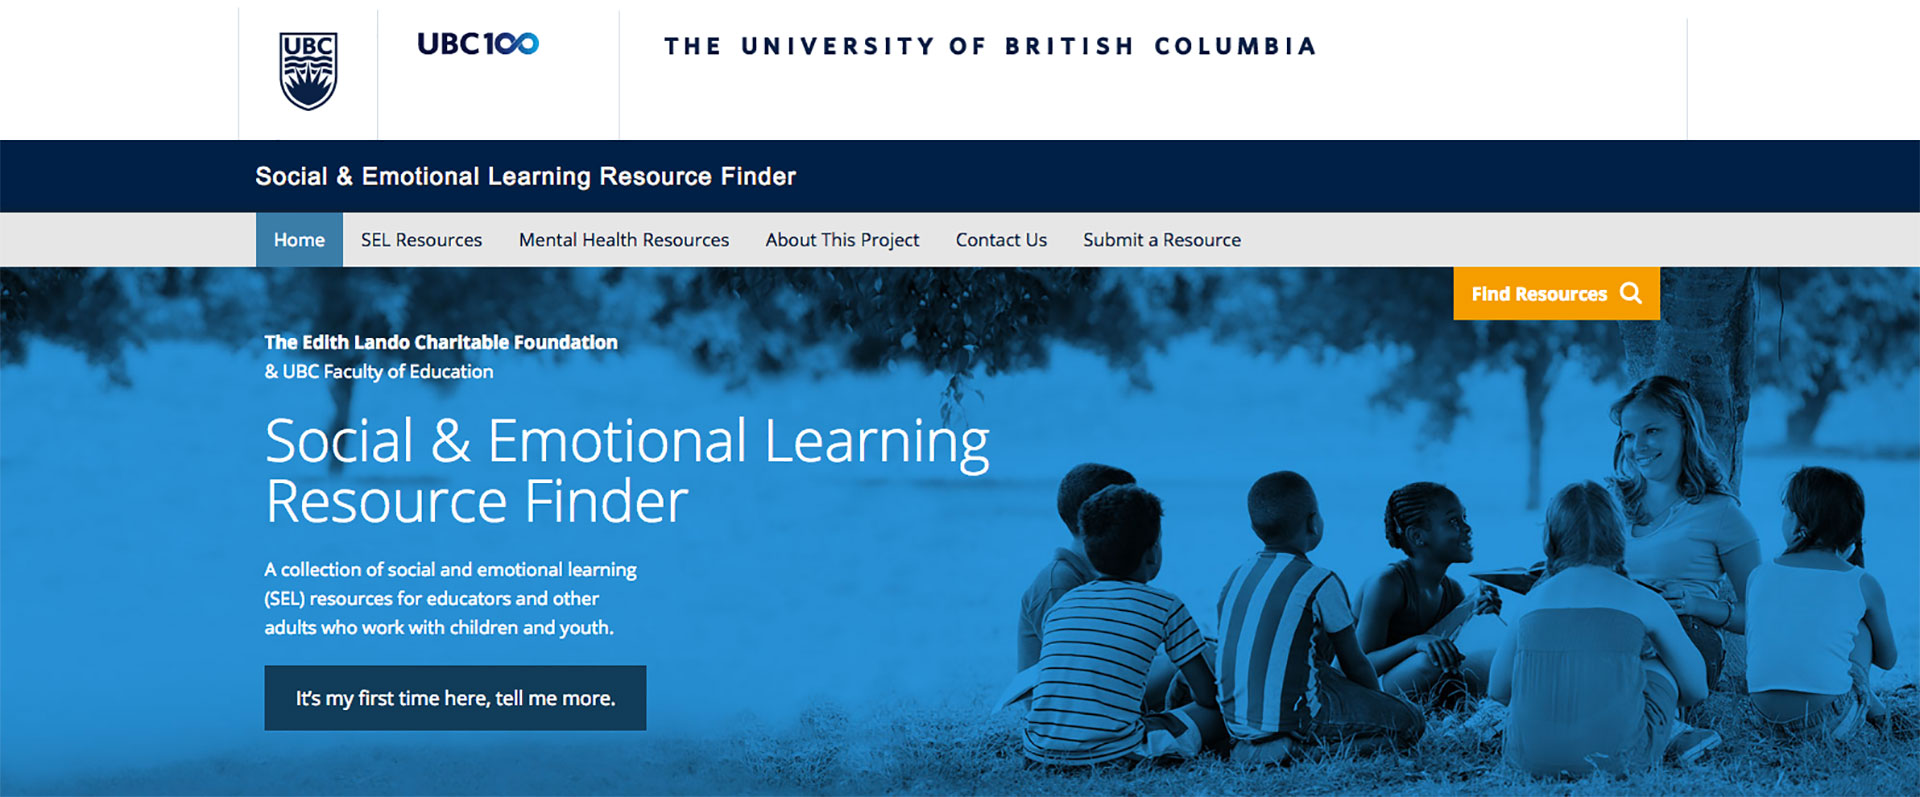 Social emotional learning resource finder